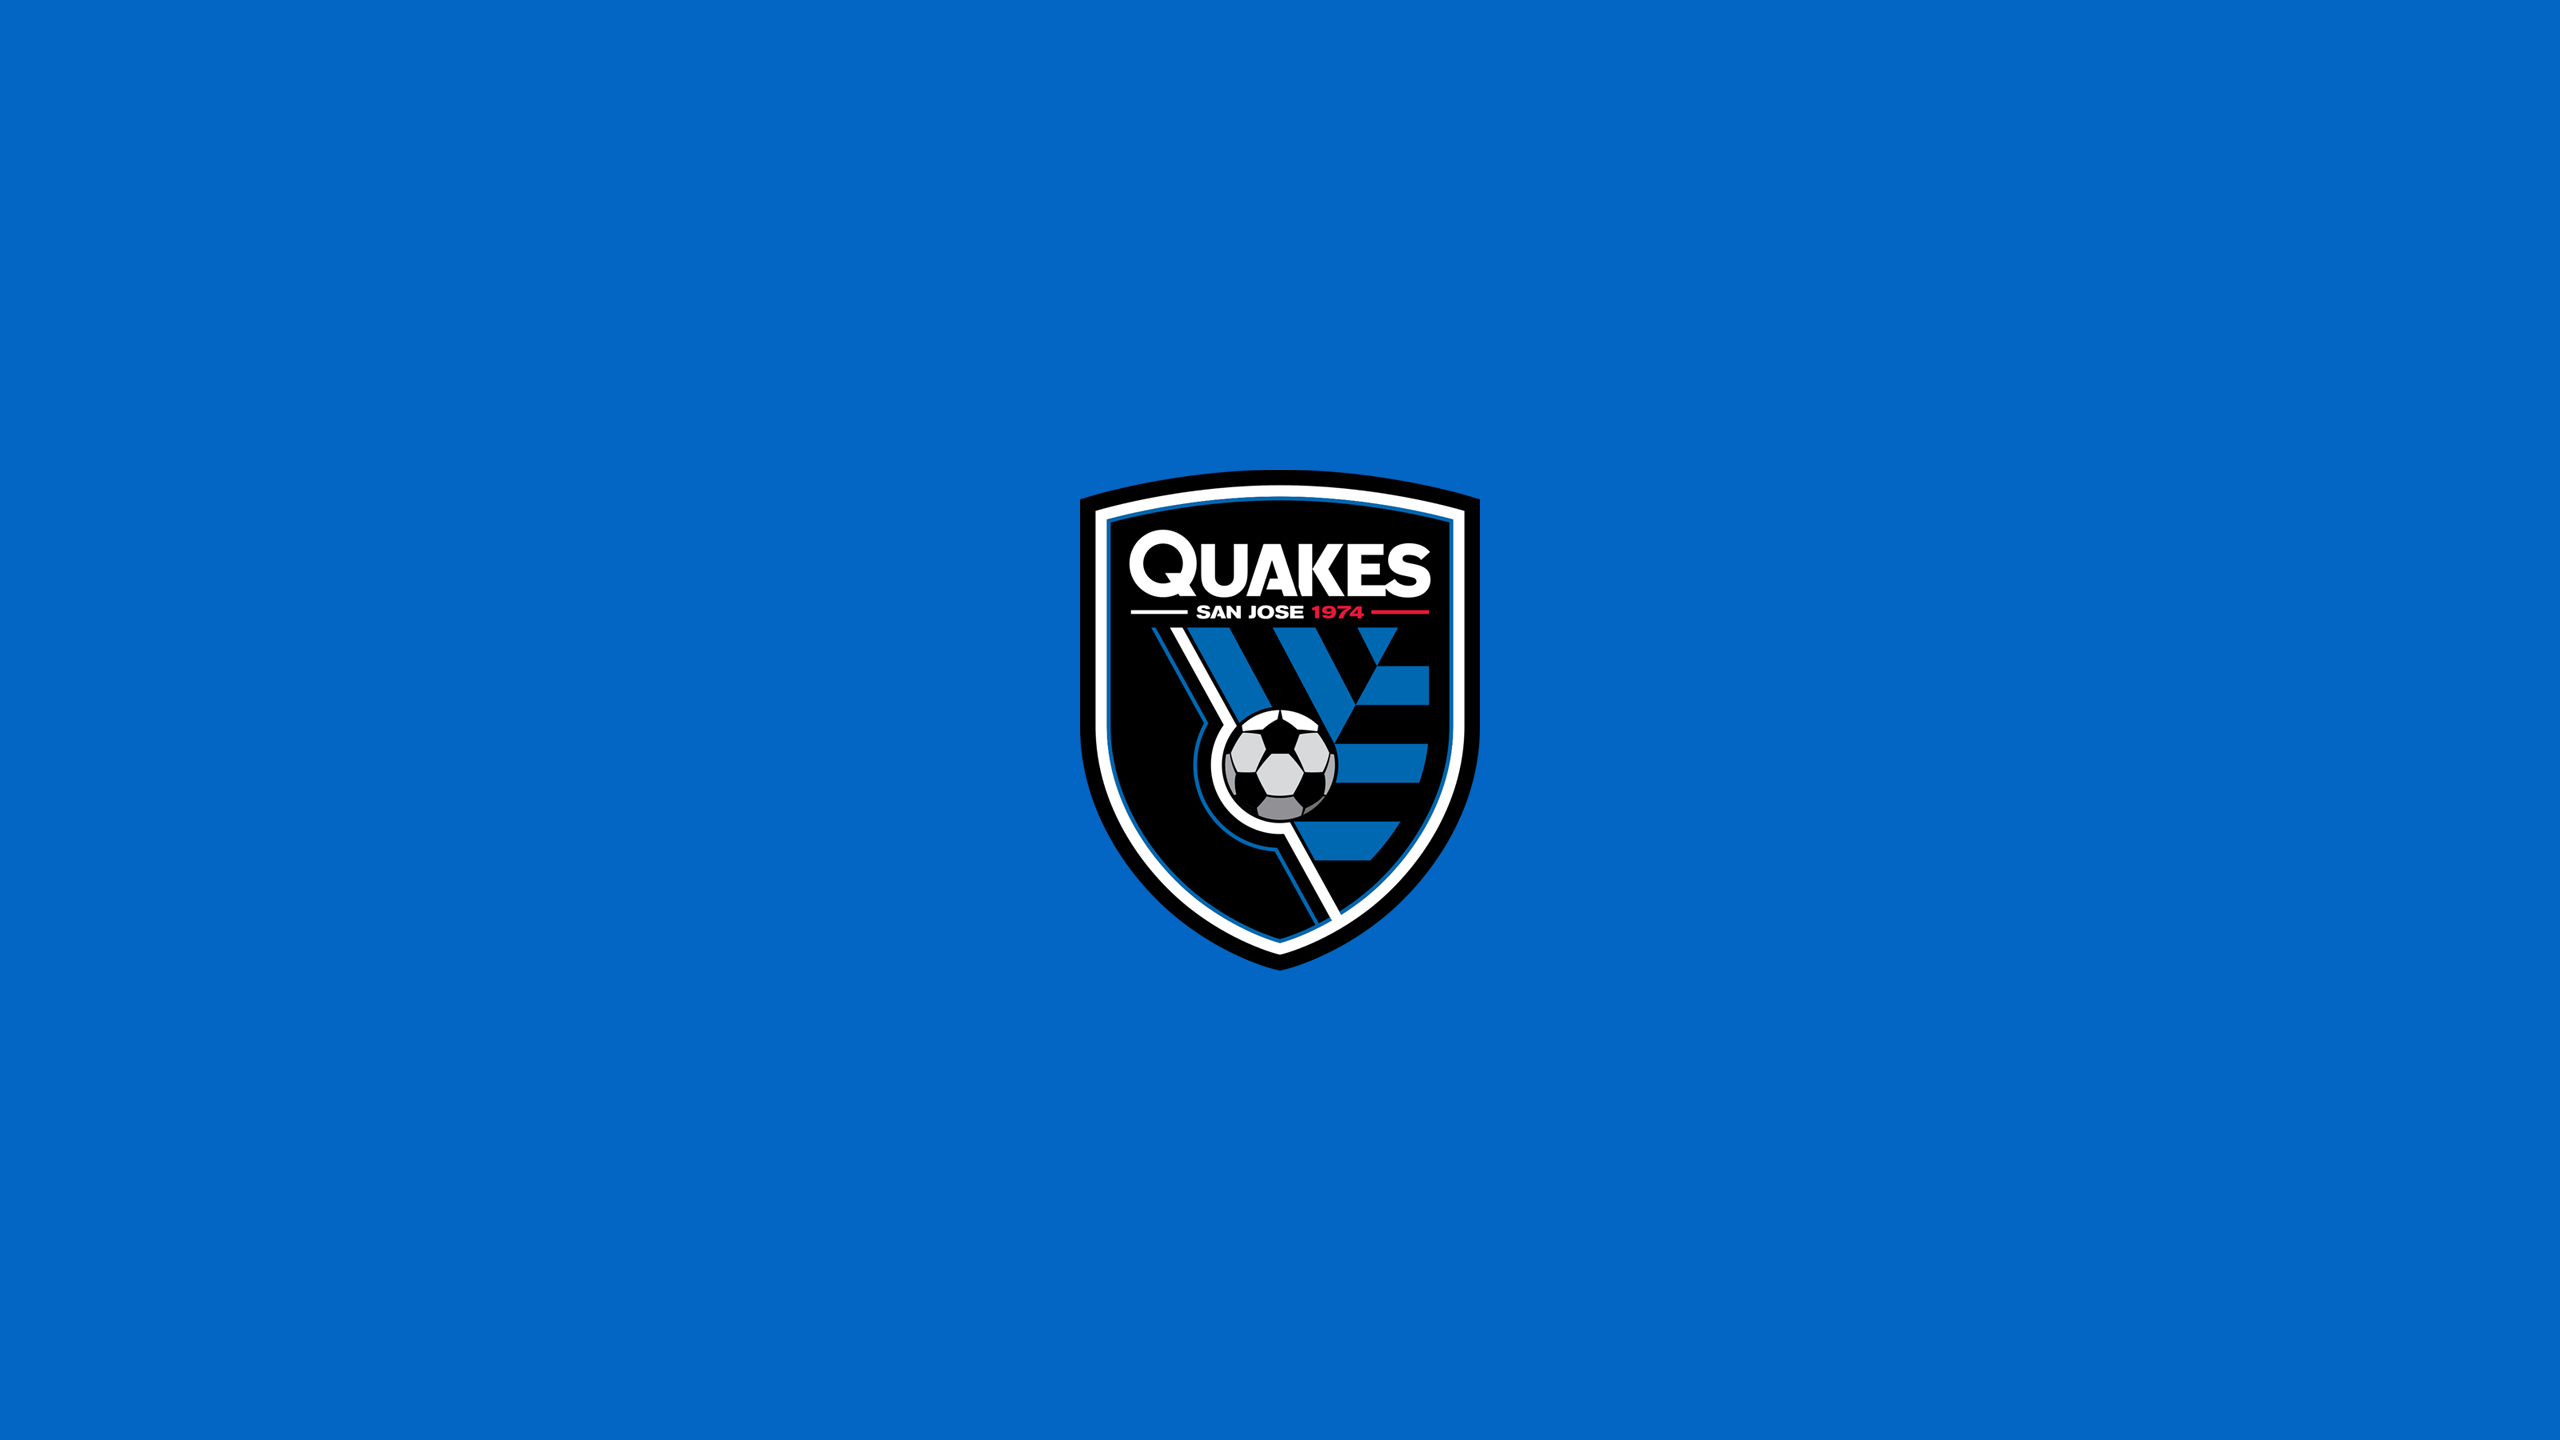 San Jose Earthquakes - Major League Soccer - Square Bettor